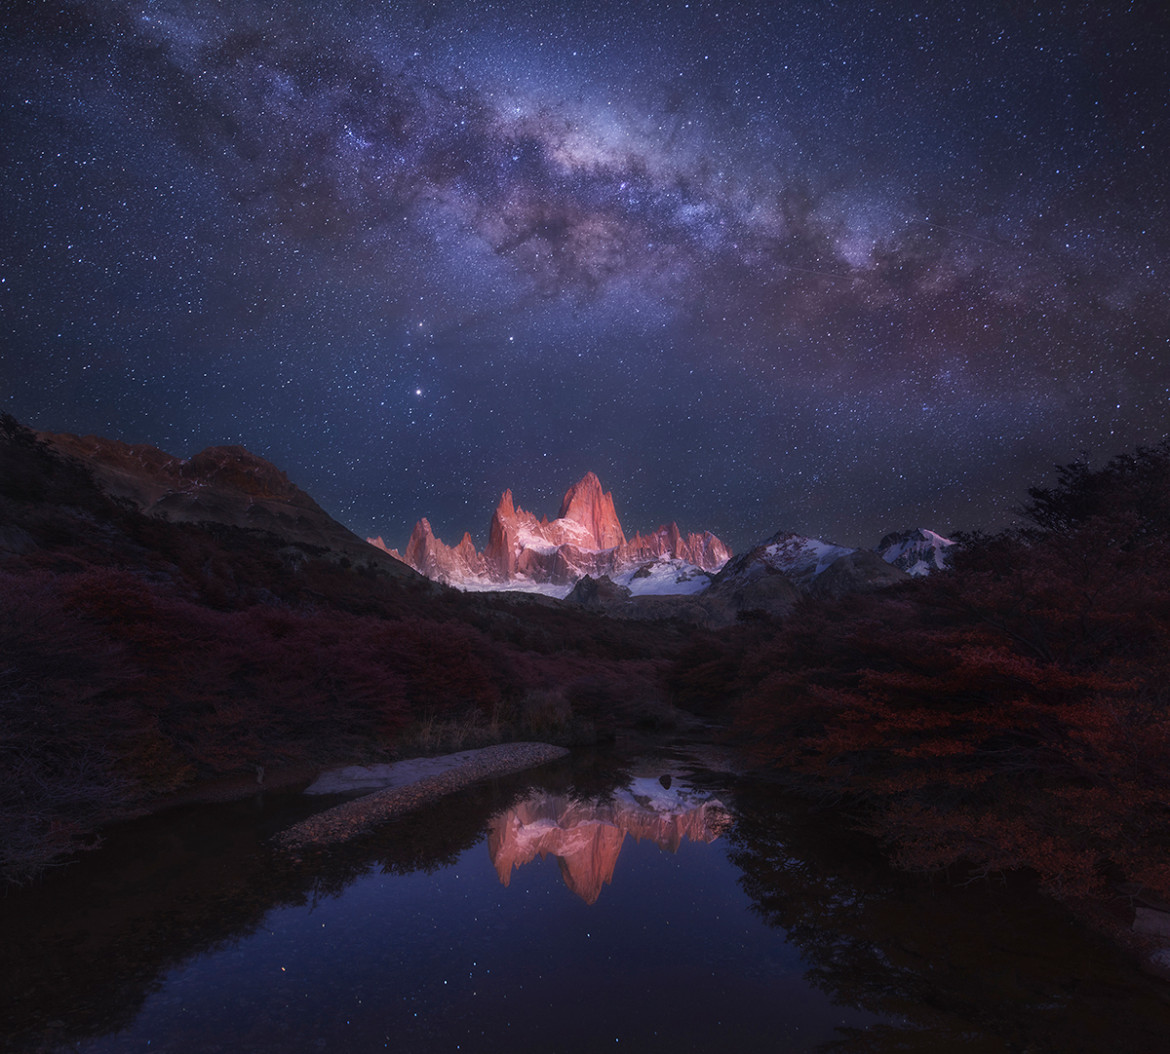 fot. Yan Zhang,
Patagonia Autumn Night, 1. miejsce w kategorii Landscapes